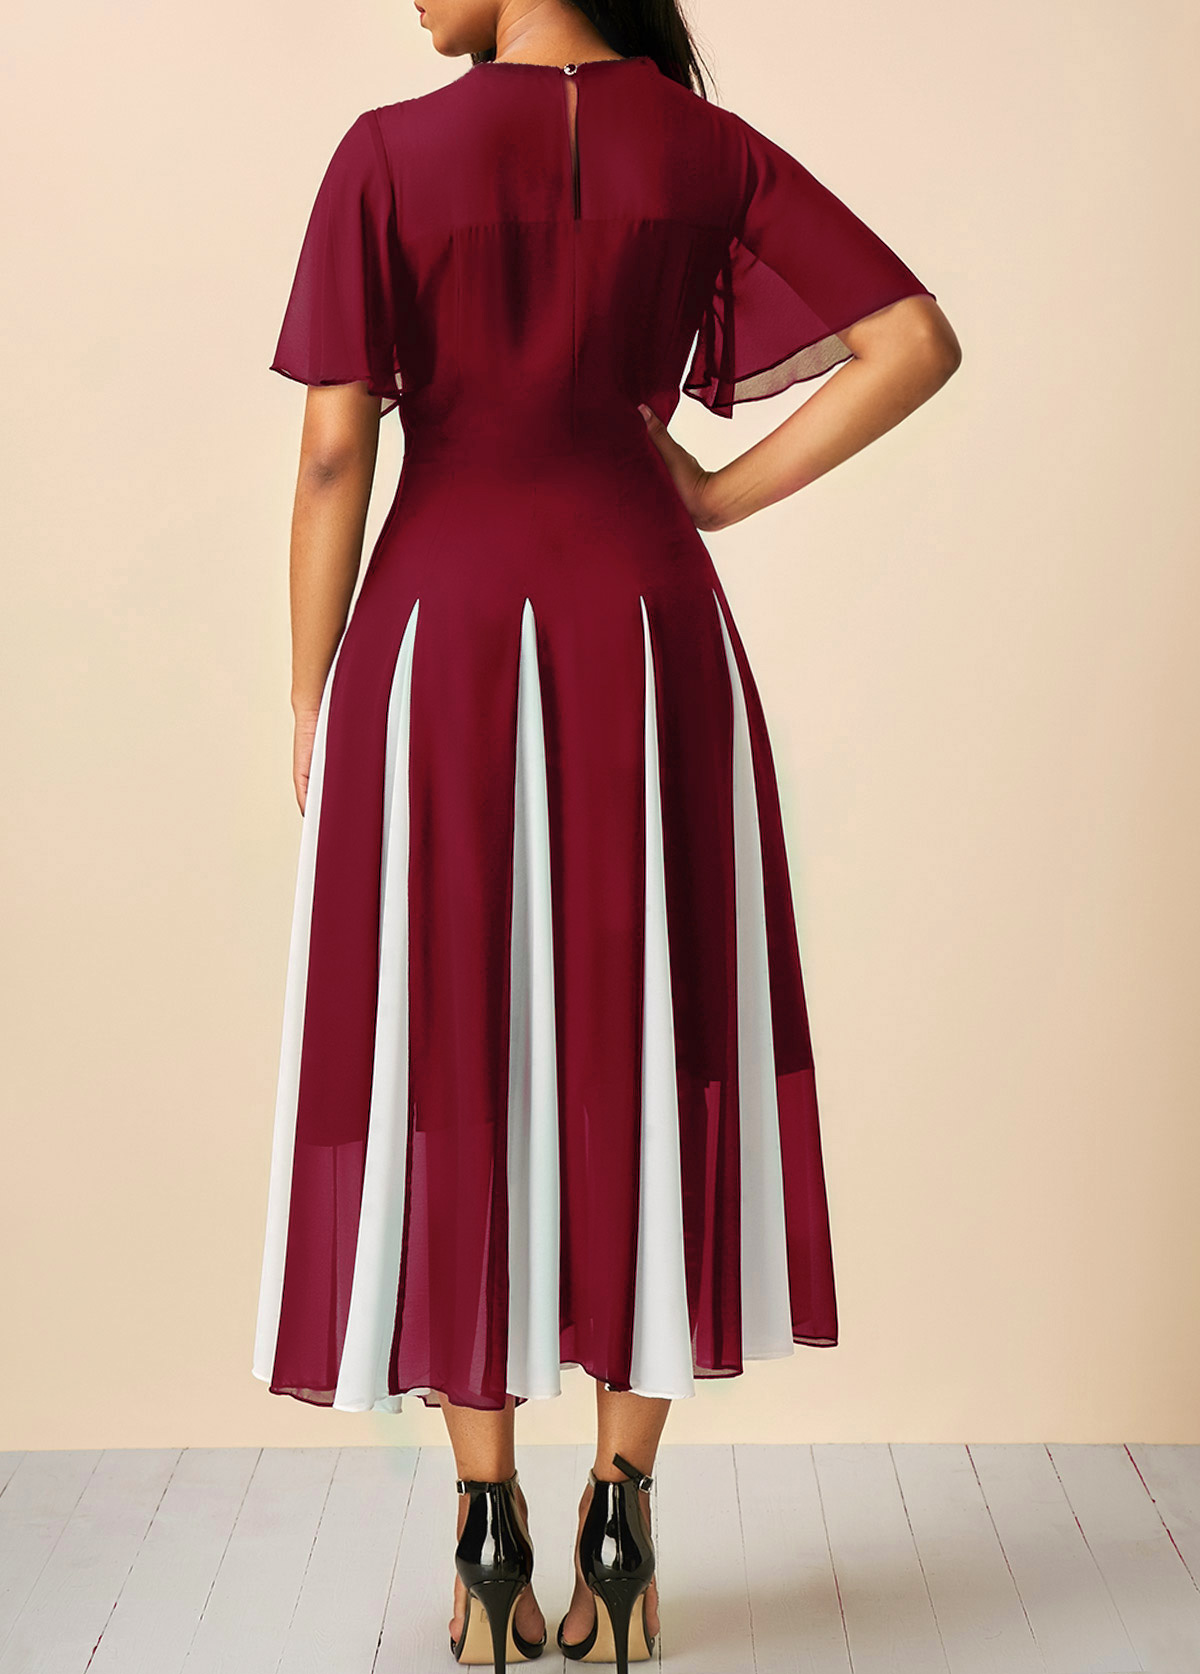 Wine Red Round Neck Short Sleeve Chiffon Dress